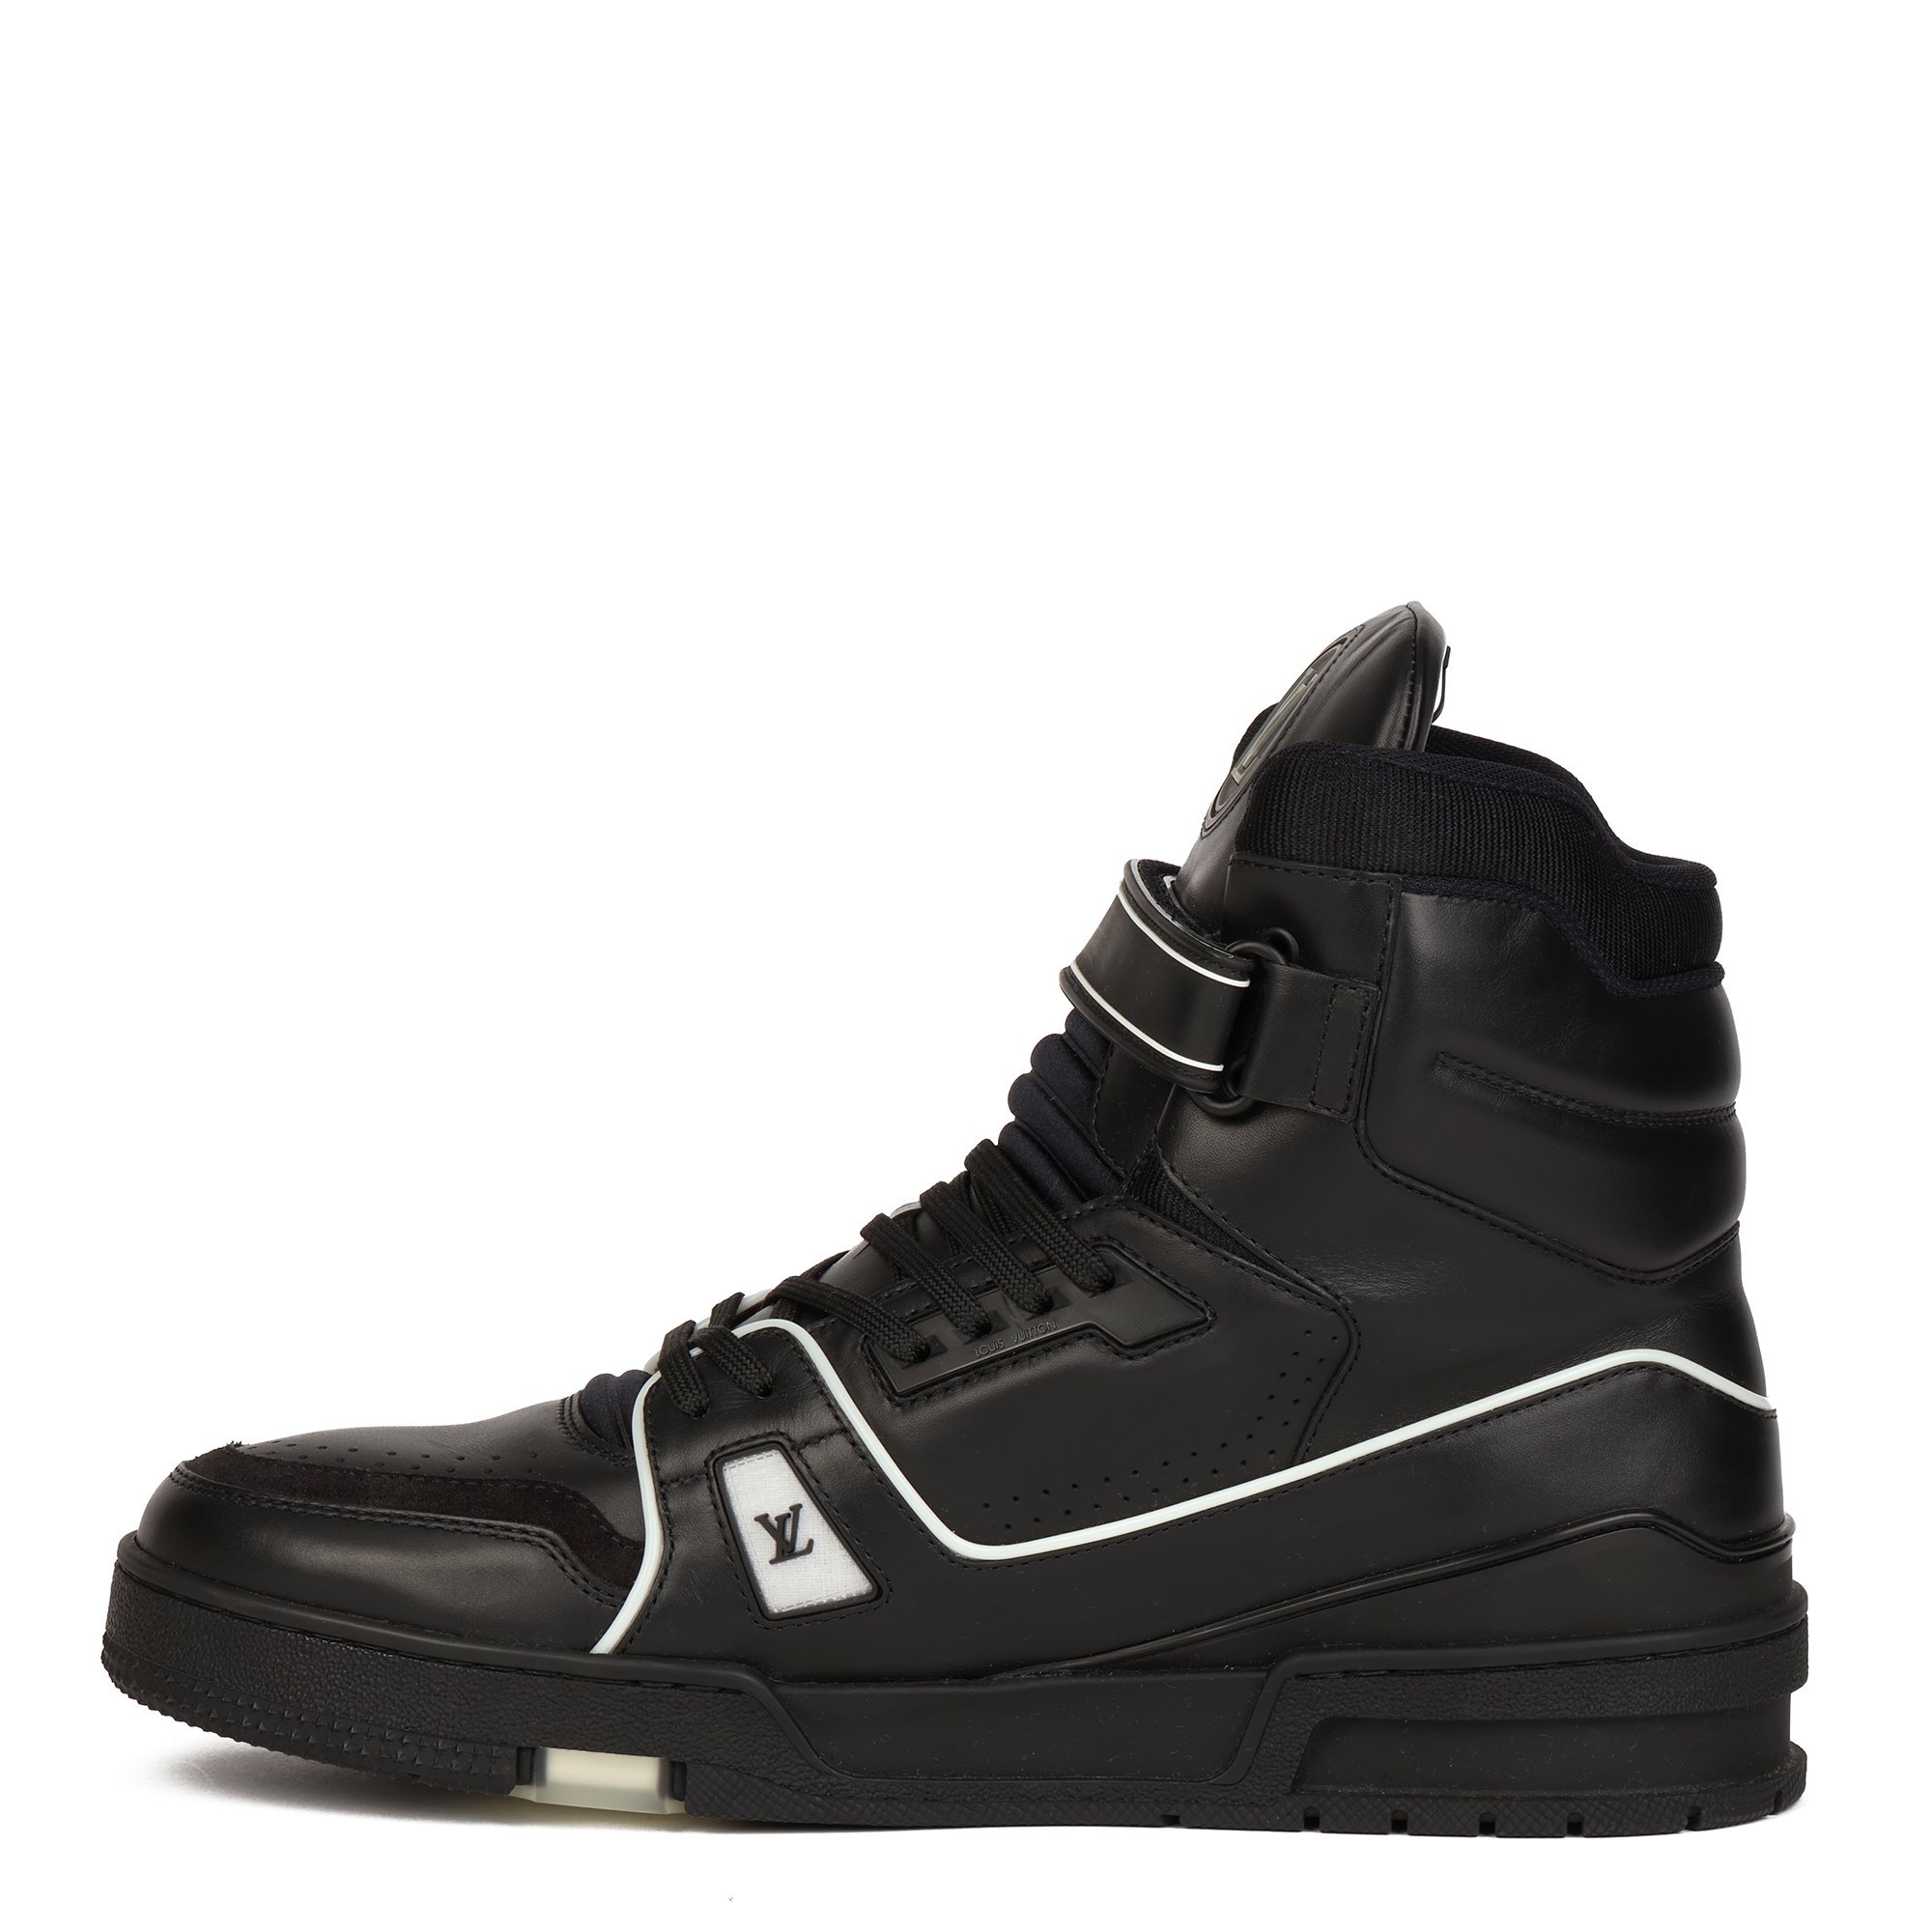 Louis Vuitton Black Calfskin Leather Fiber Optic Light Up X408 High Top Sneakers - Size UK 10.5